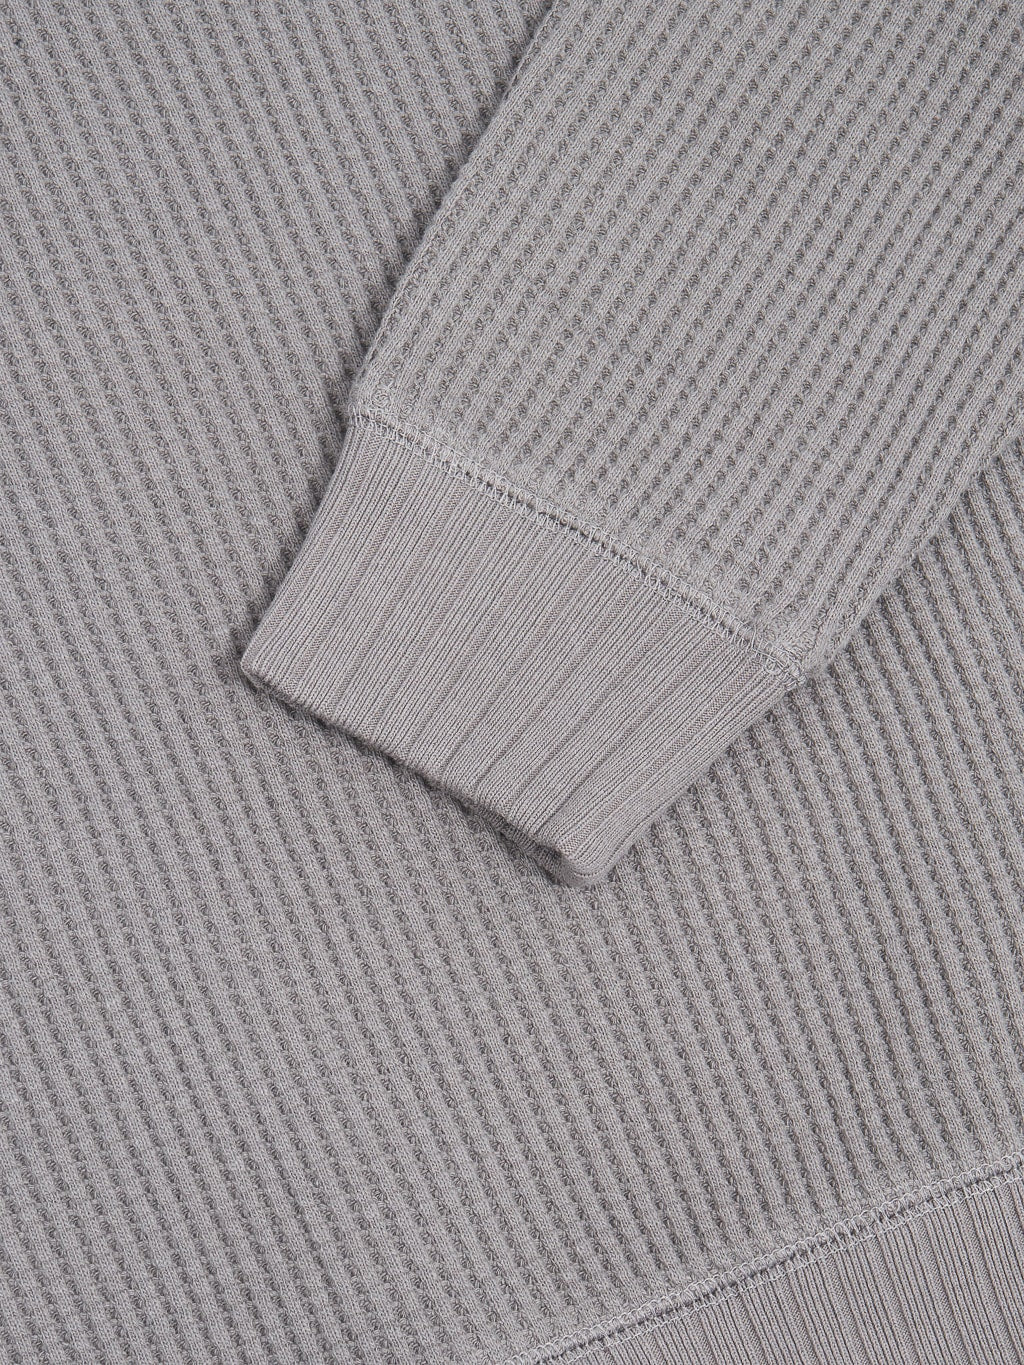 Jackman Waffle Midneck Sweater Iron Grey cuff cotton detail